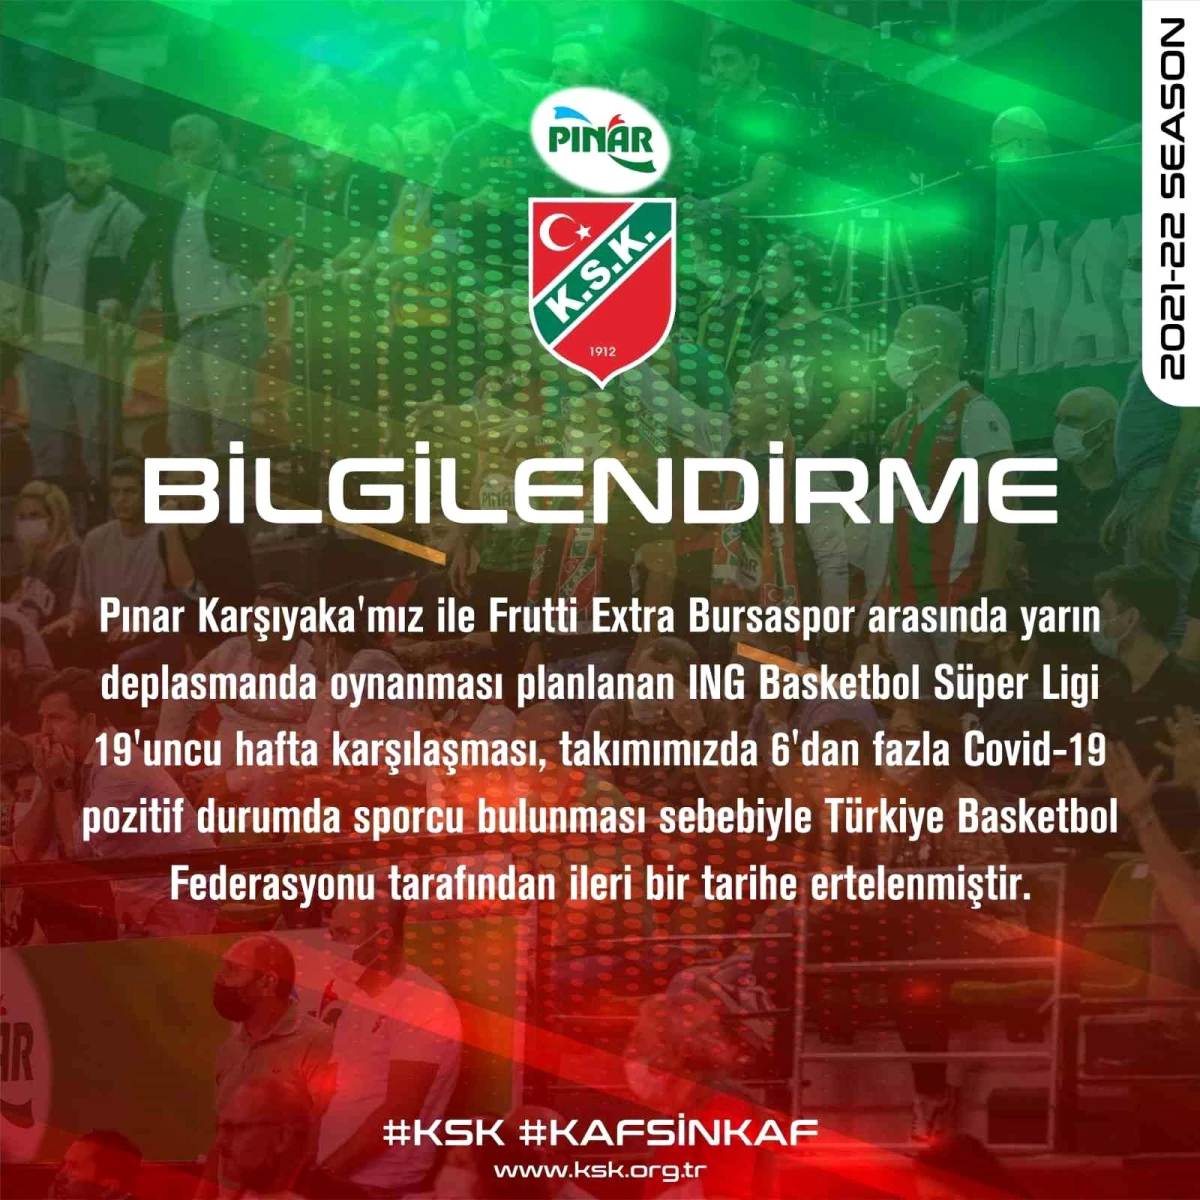 ING Basketbol Süper Ligi\'nde Pınar Karşıyaka-Frutti Extra Bursaspor maçı ertelendi